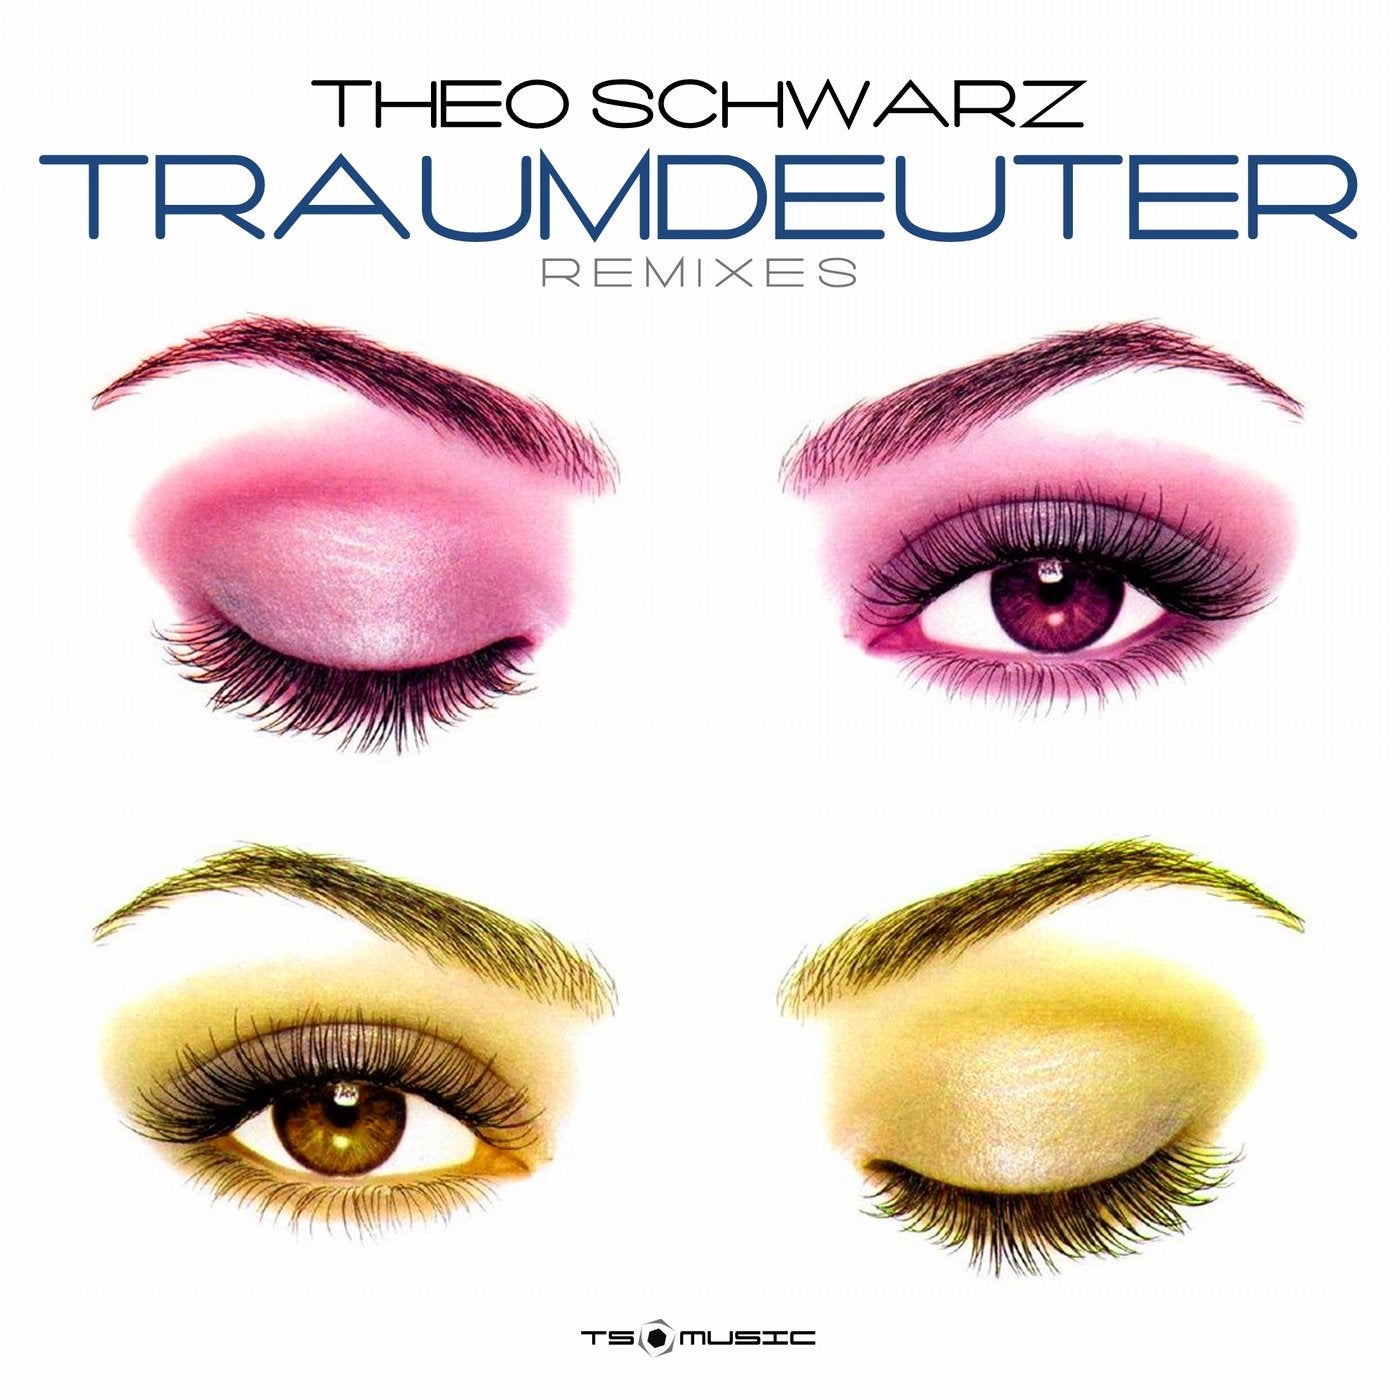 Traumdeuter (Remixes)